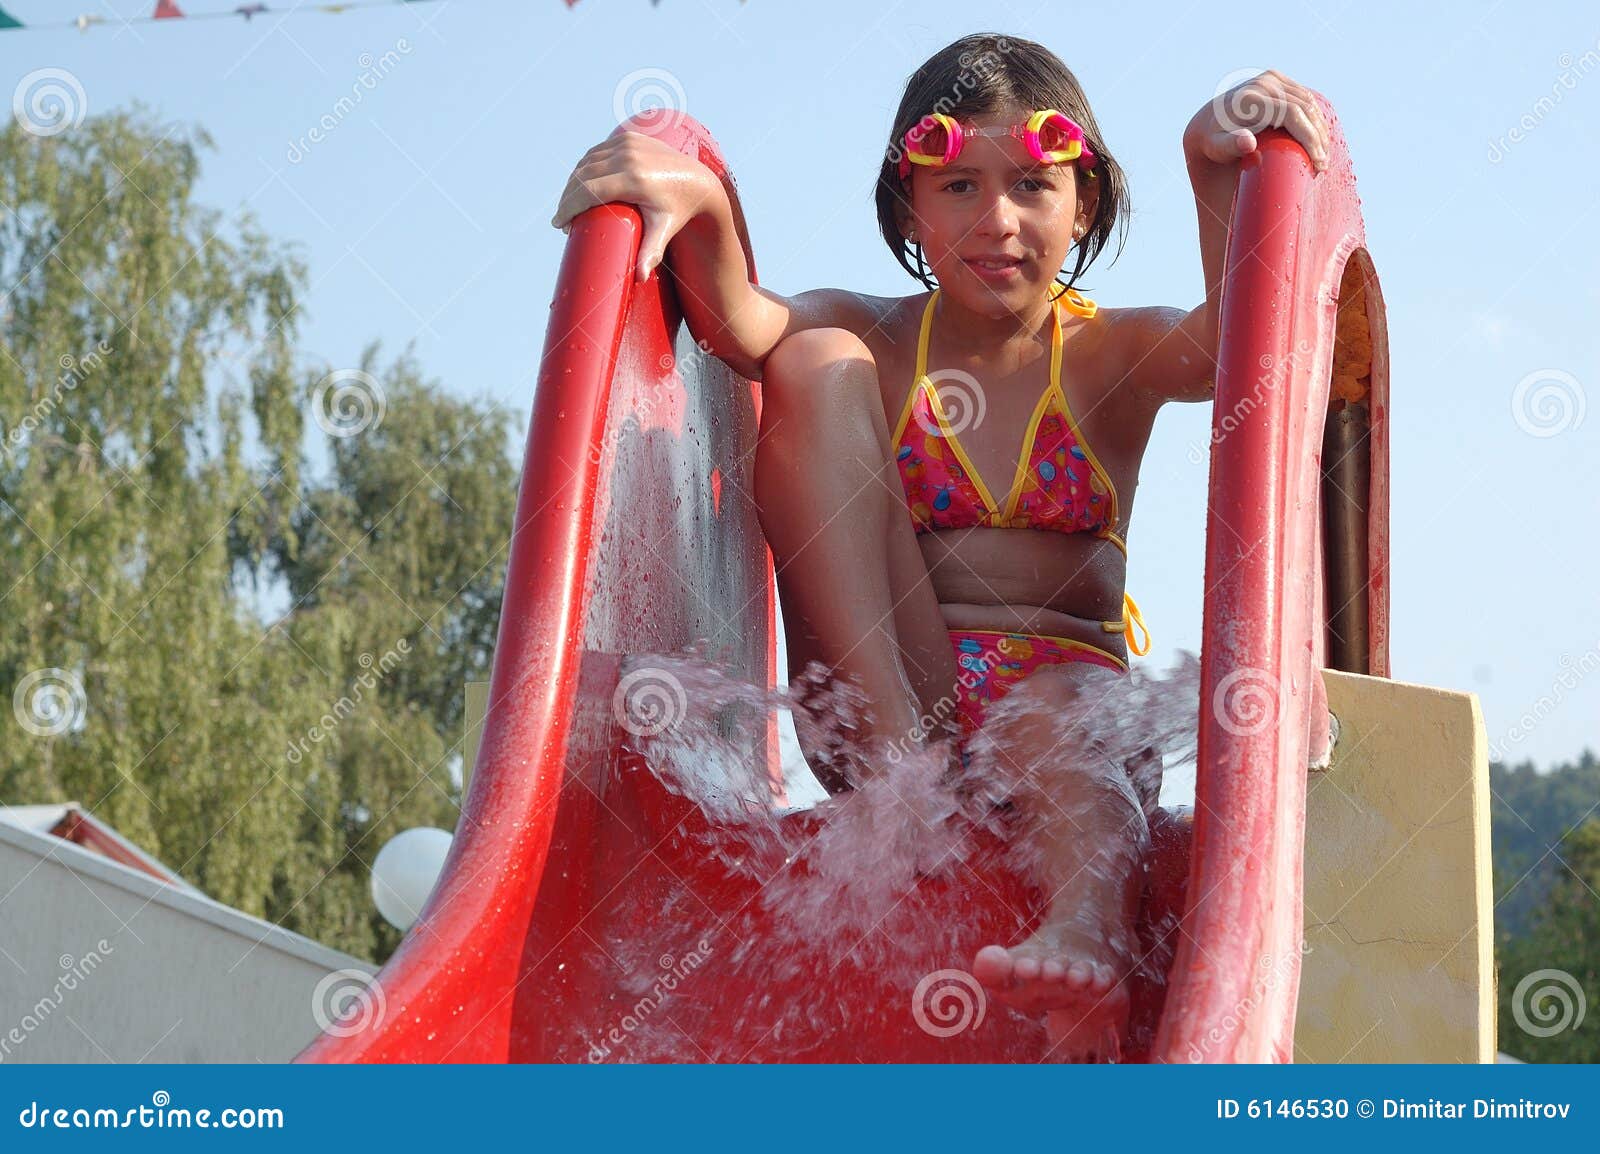 girls pool slides